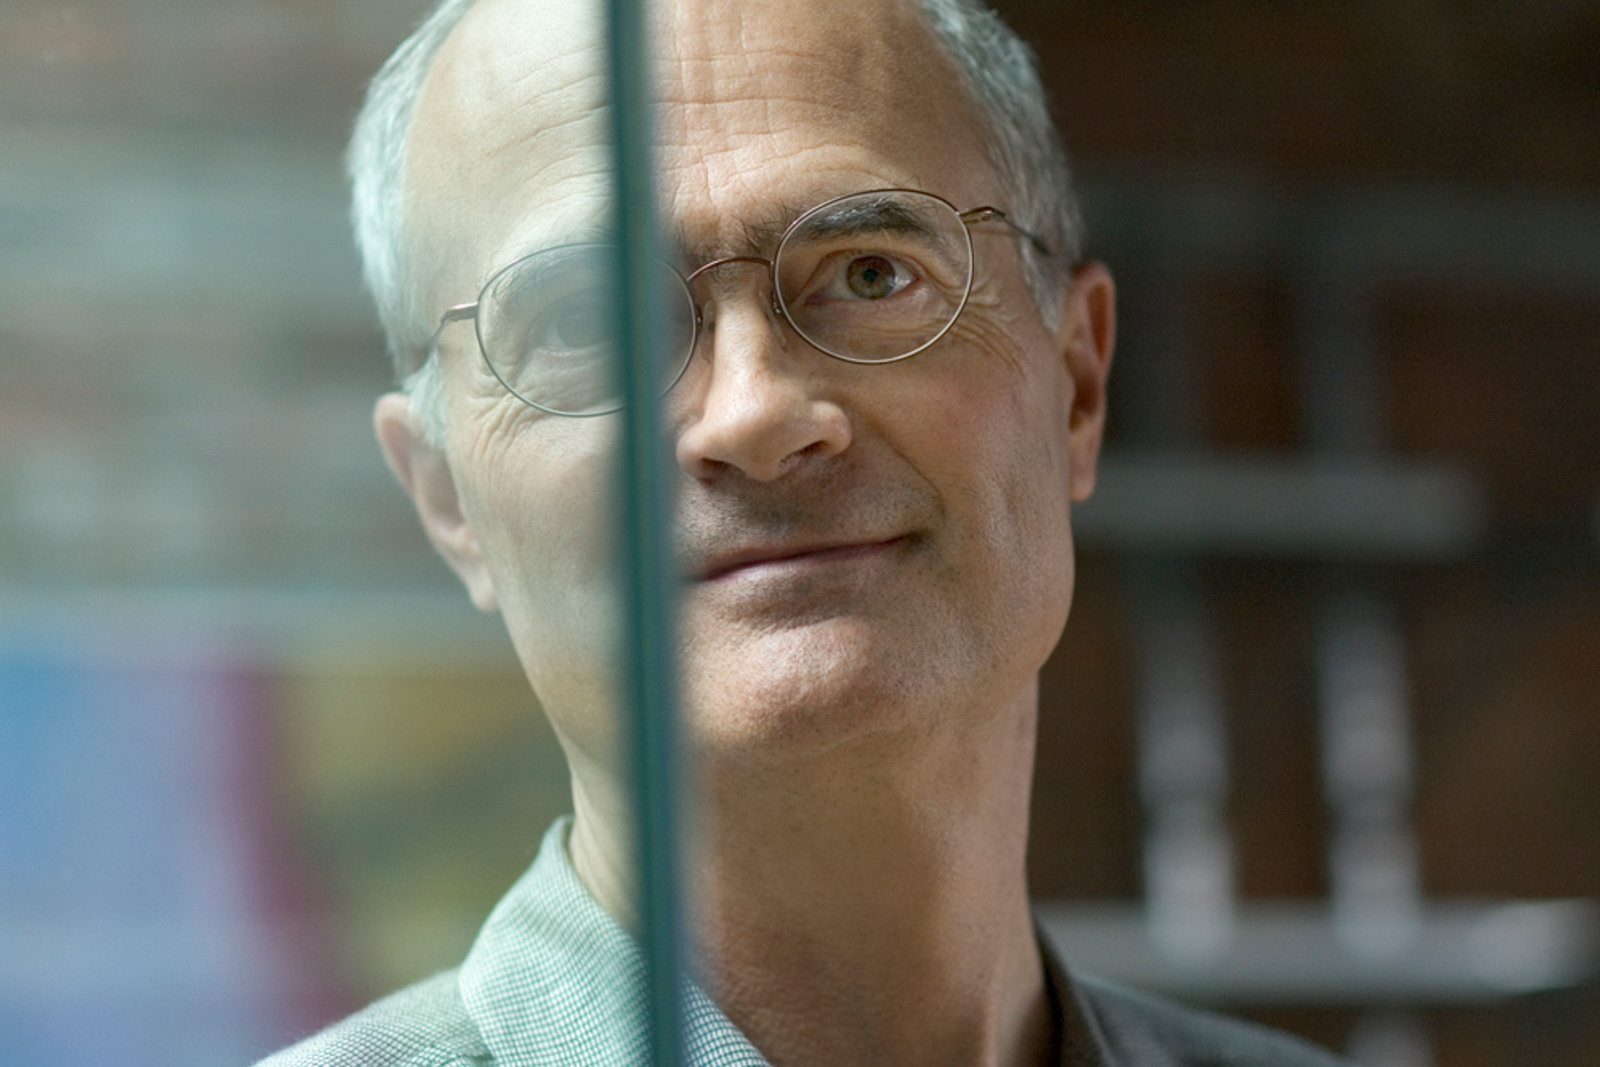 Portrait of older man looking pensive seen through glass